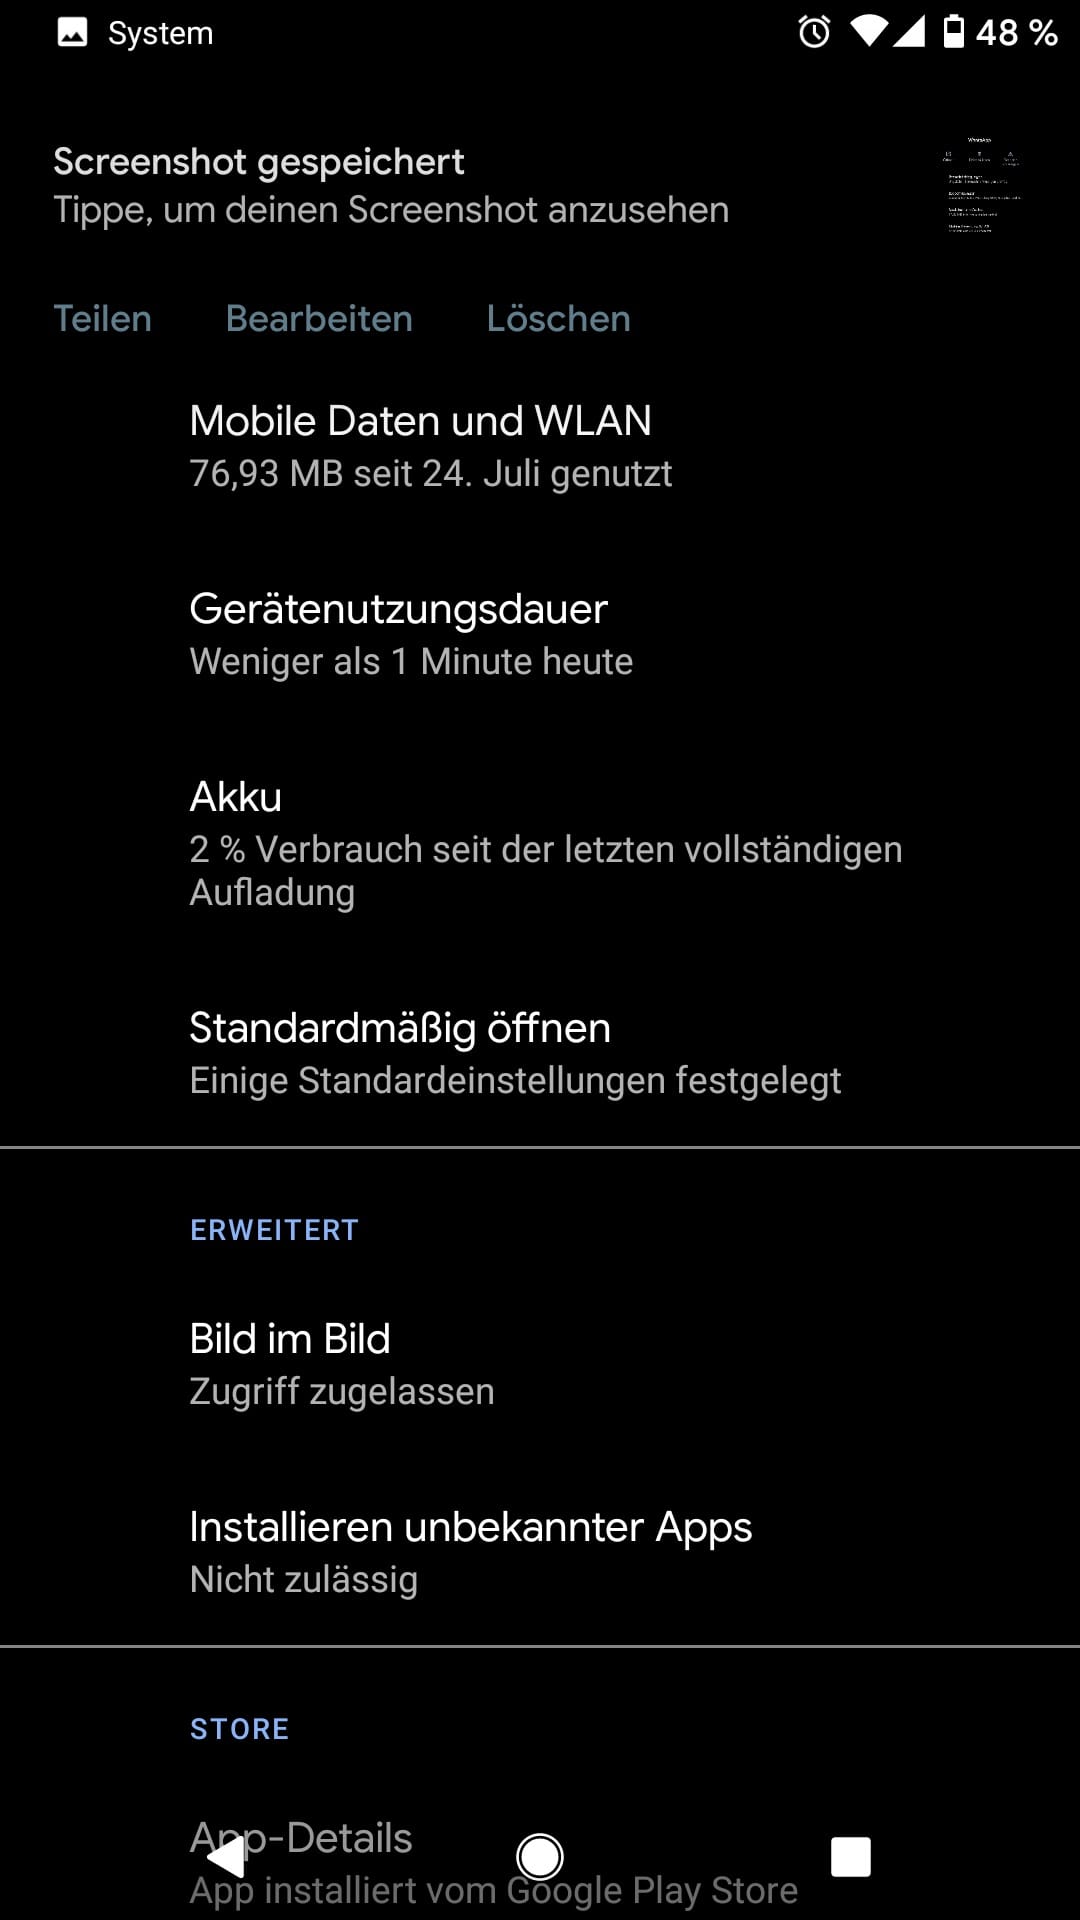 Akkutricks mit Android 10